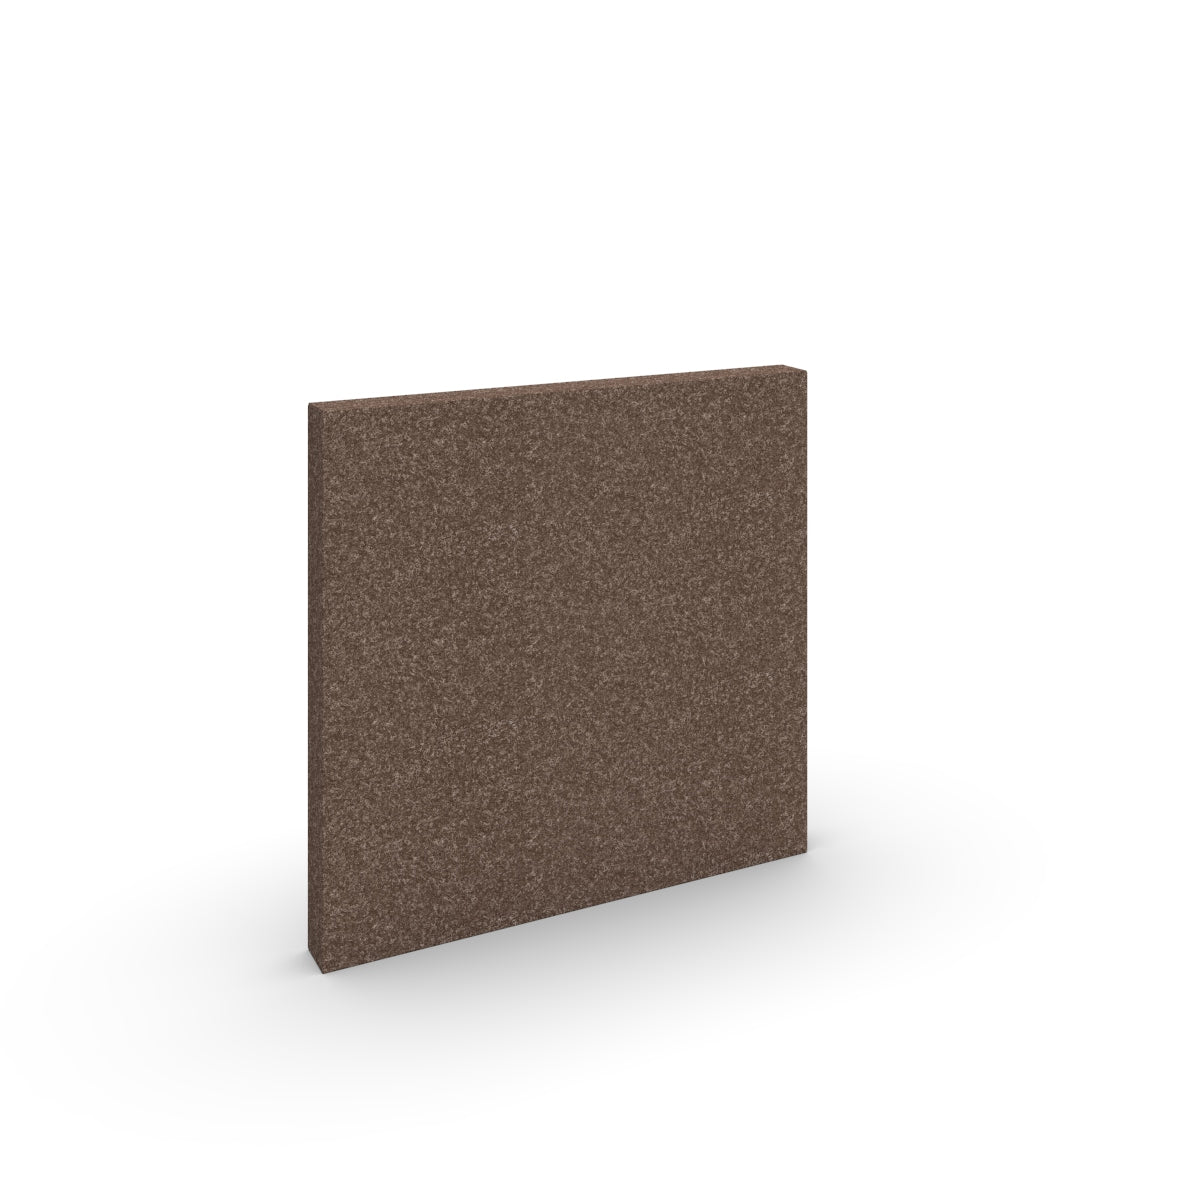 Square basic wall sound absorber in brown acoustic wool felt. Akustikkplater og lyddemping vegg